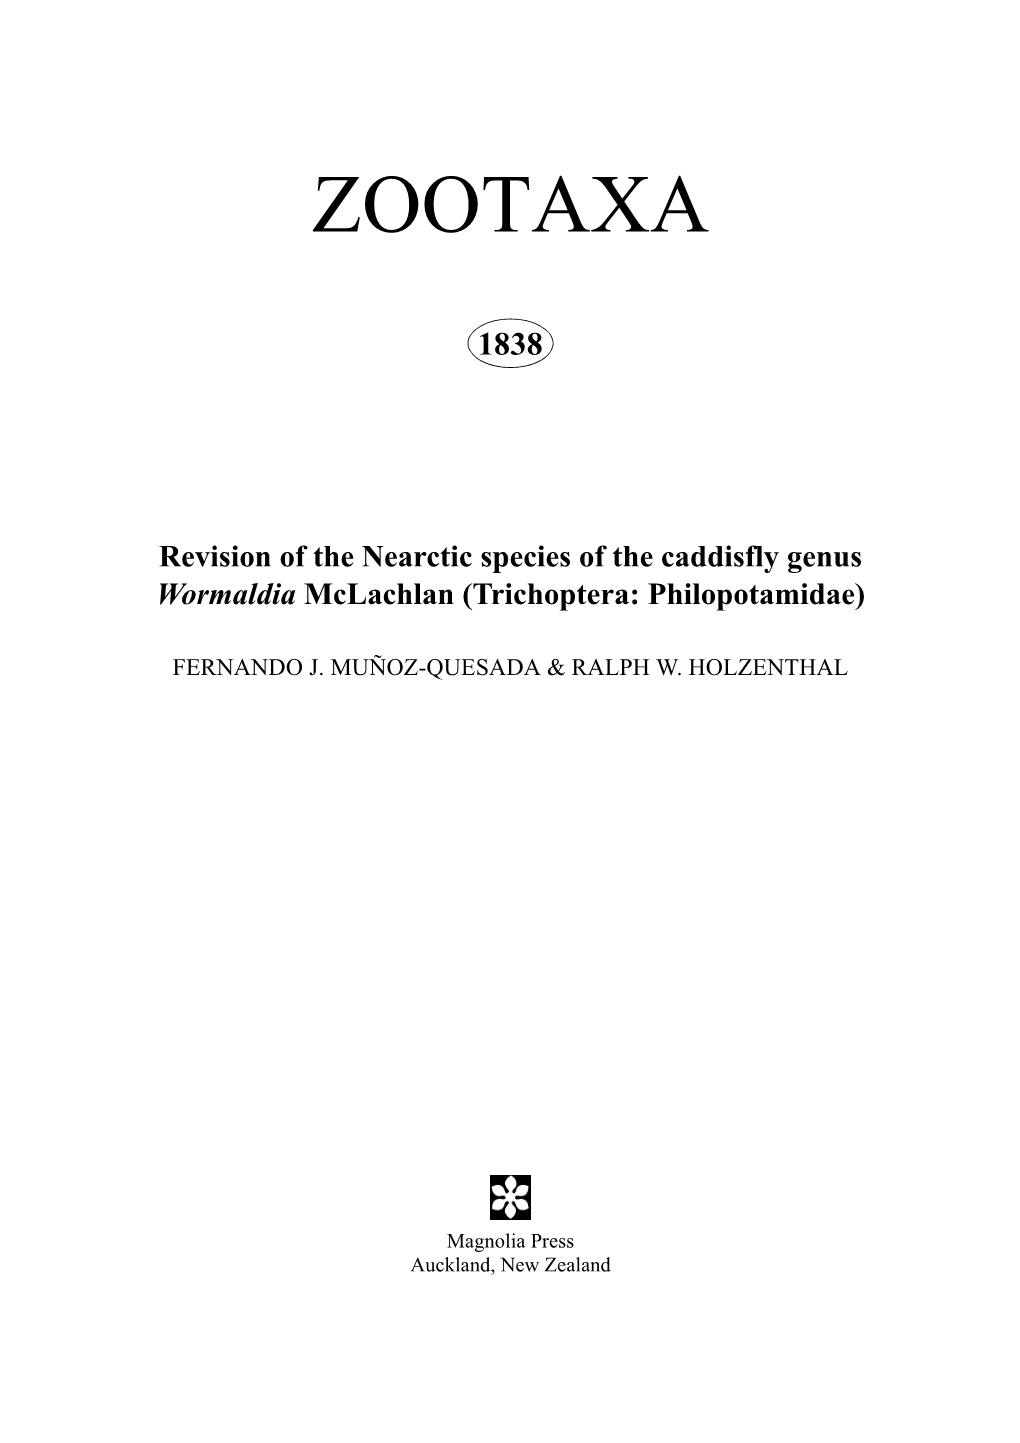 Zootaxa, Revision of the Nearctic Species of the Caddisfly Genus Wormaldia Mclachlan